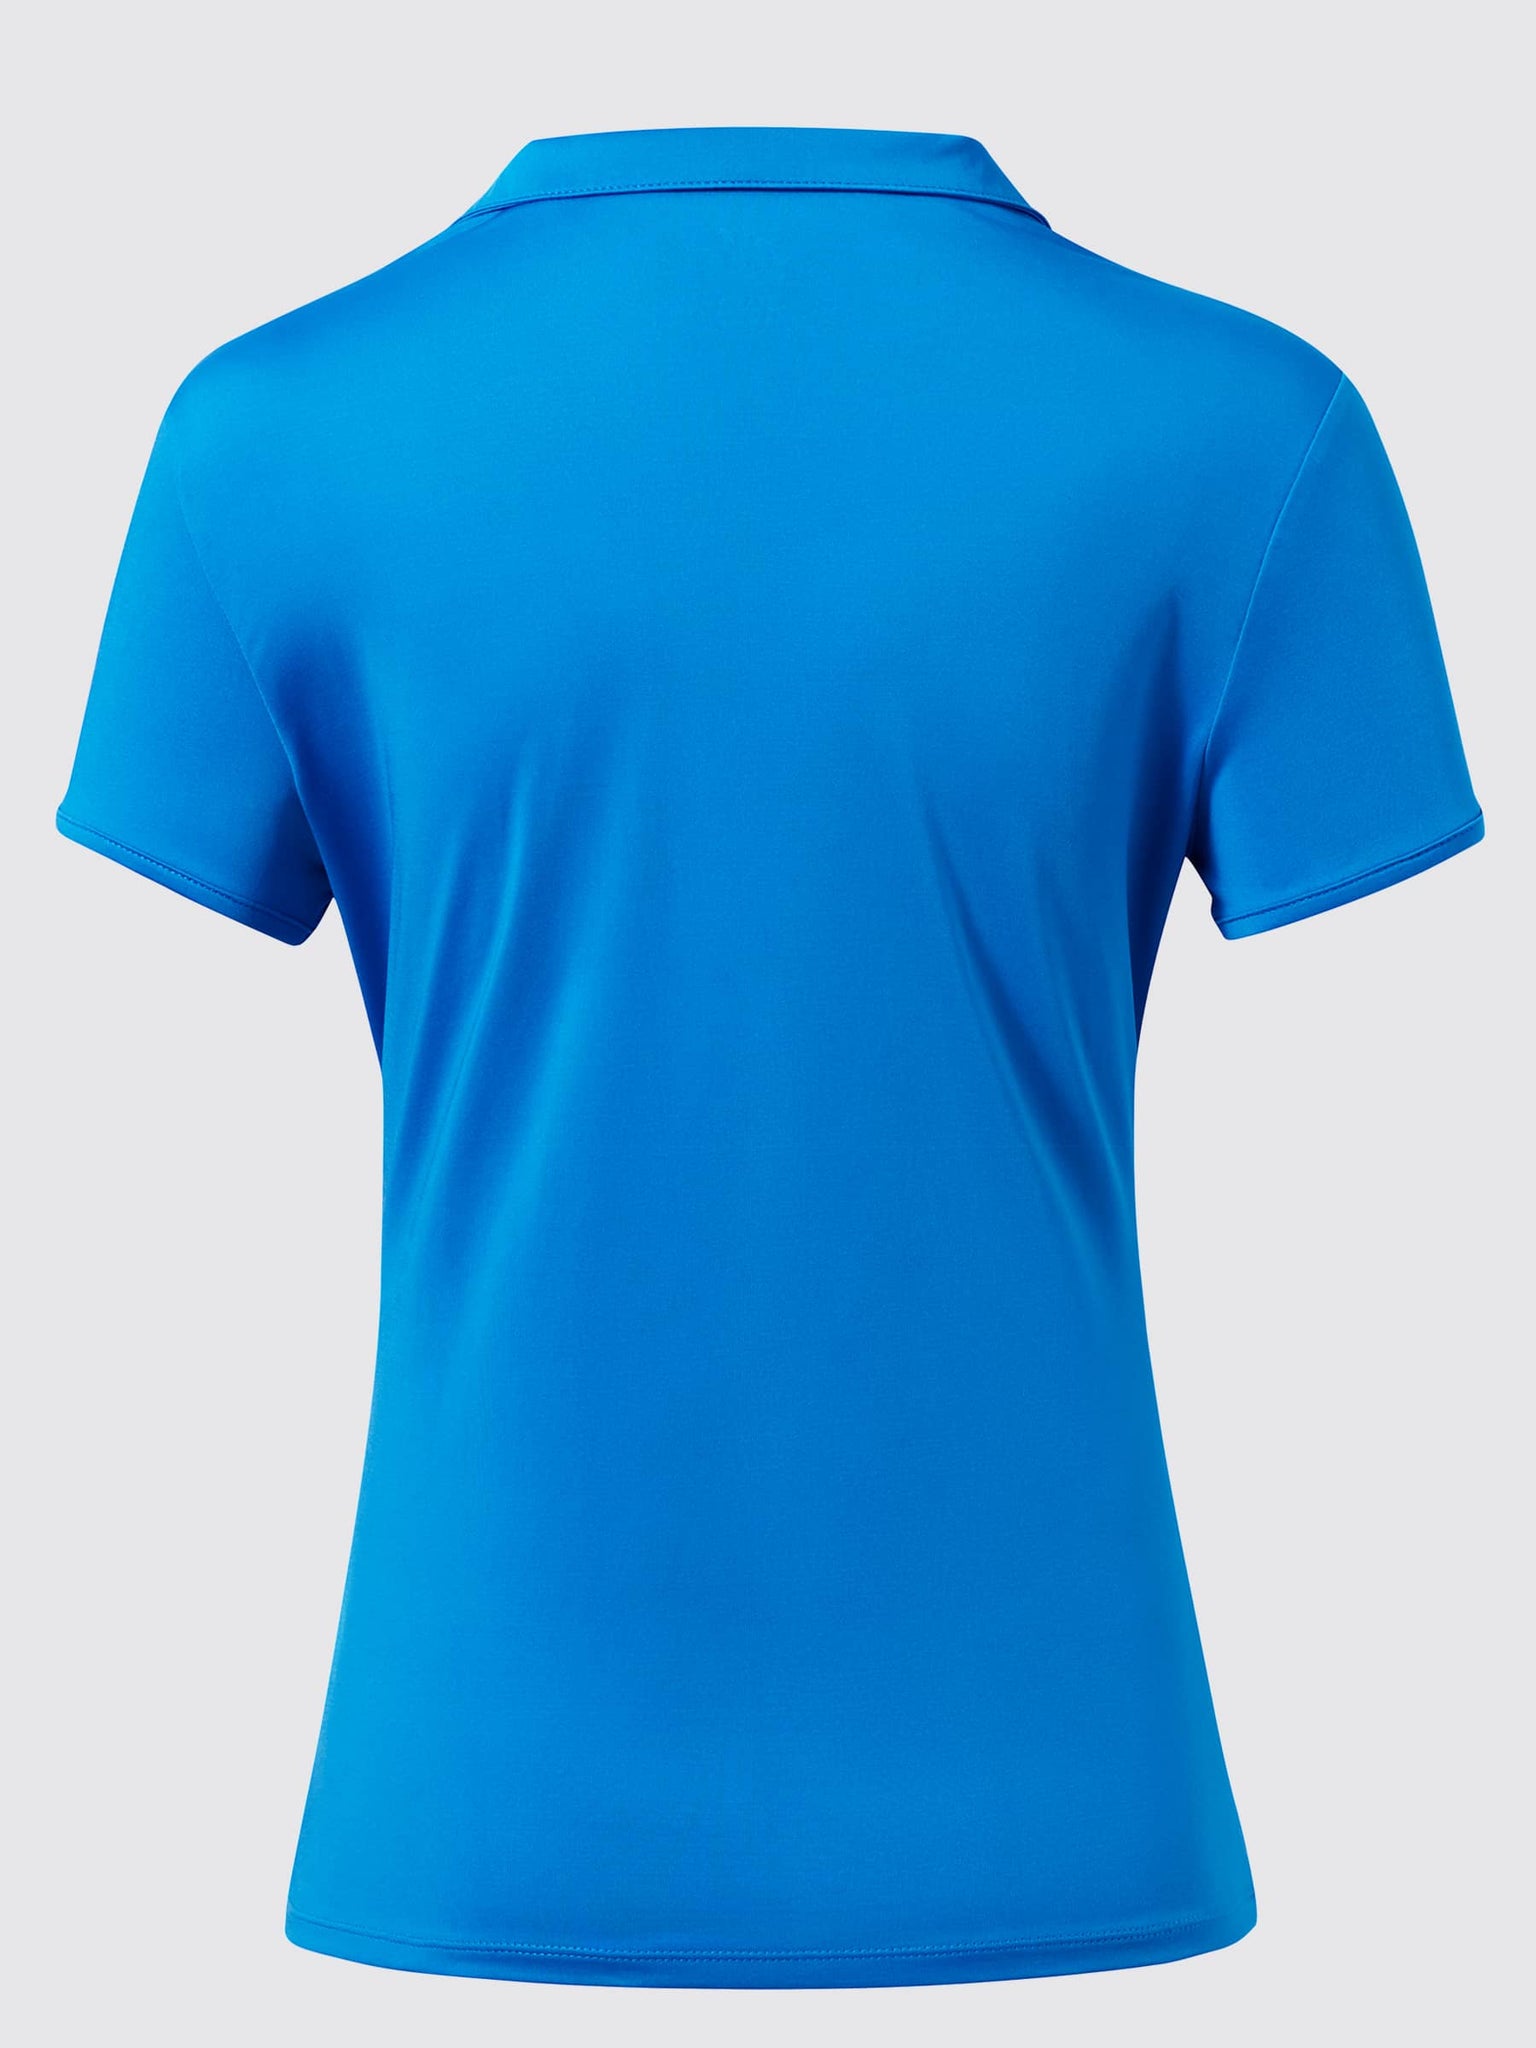 Willit Women's Golf Polo Short Sleeve Shirts_Blue3